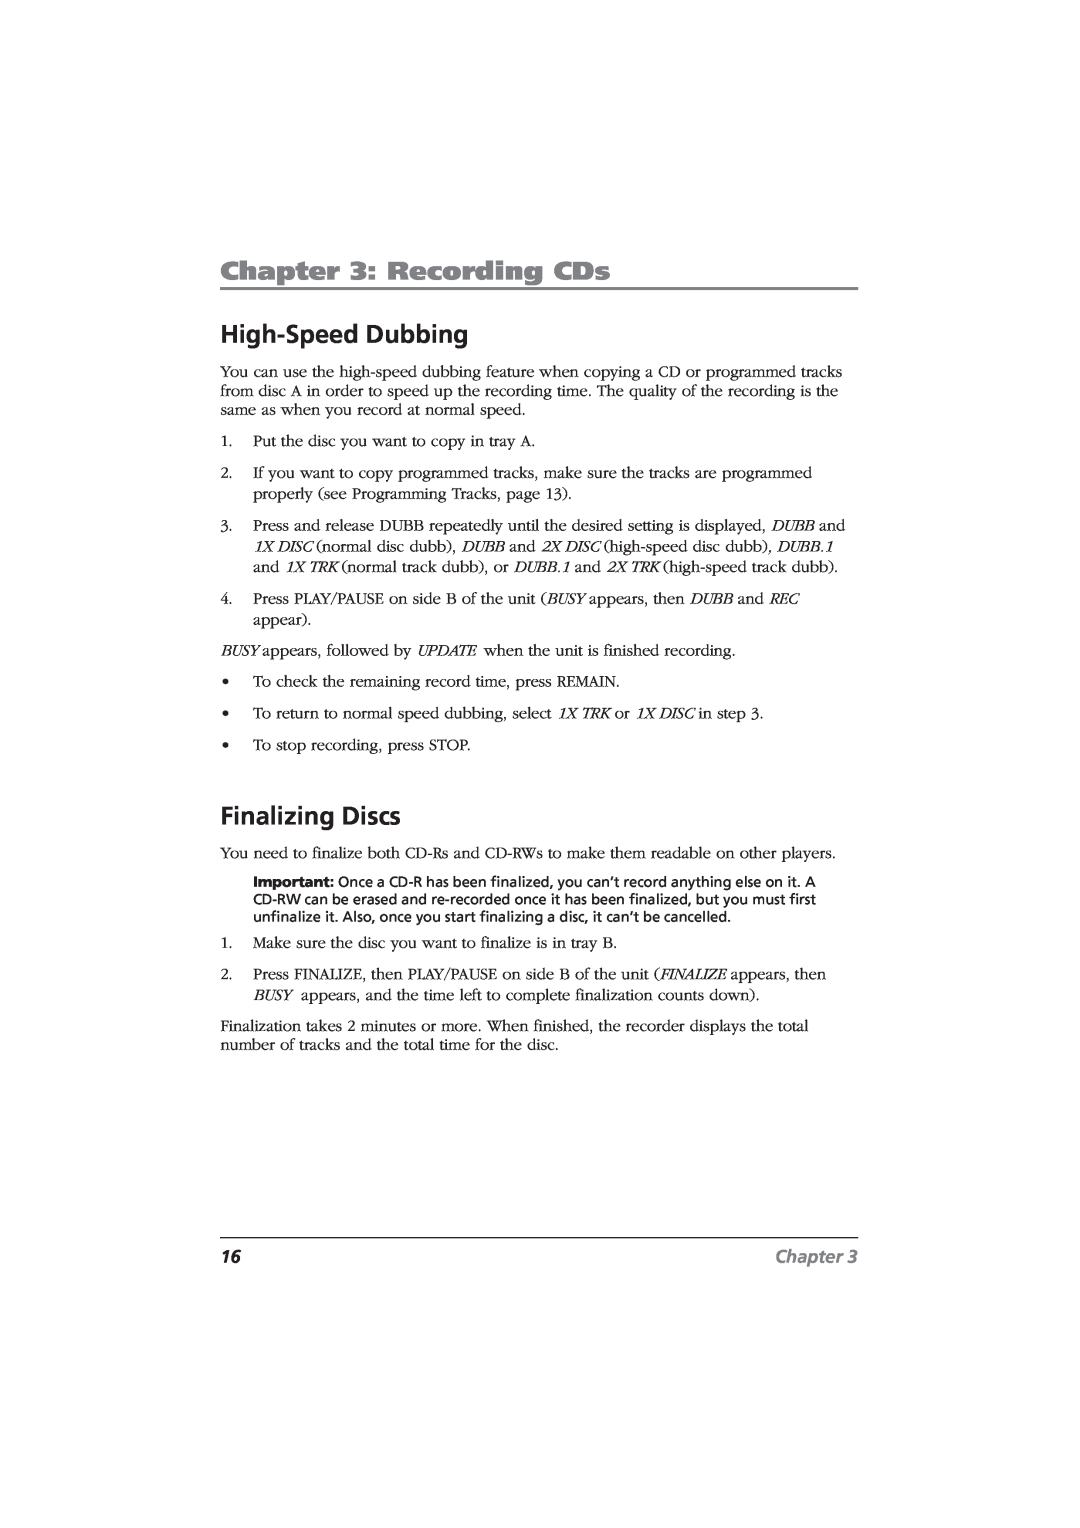 RCA CDRW10 manual High-SpeedDubbing, Finalizing Discs, Recording CDs, Chapter 